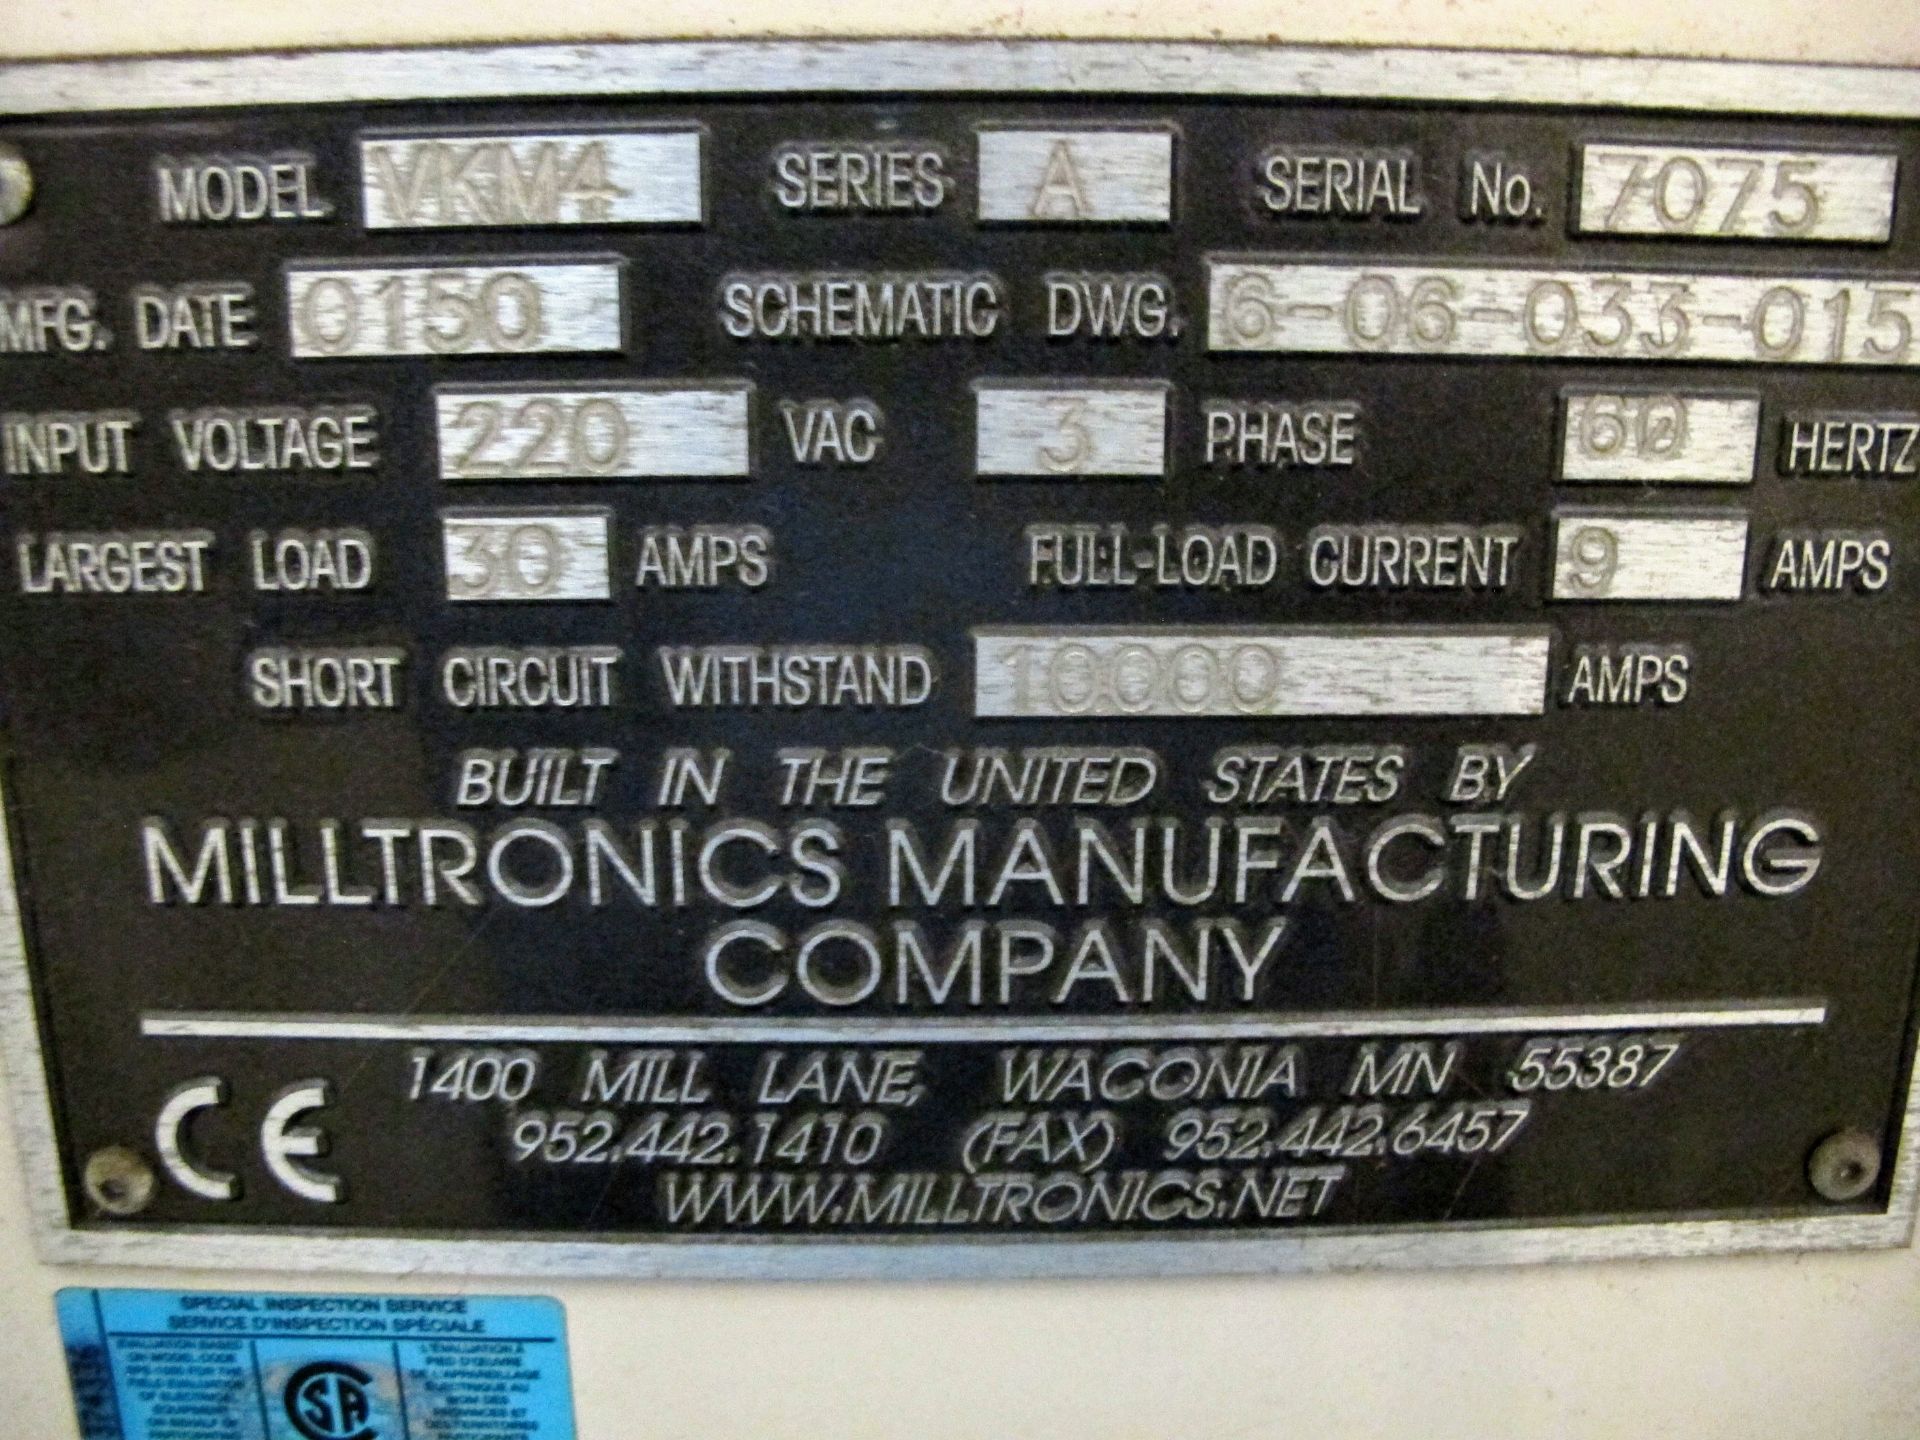 2001 MILLTRONICS VKM4 CNC MILLING MACHINE, S/N 7075, CENTURION 6 CNC CONTROL, 12" X 50" TABLE - Image 4 of 15